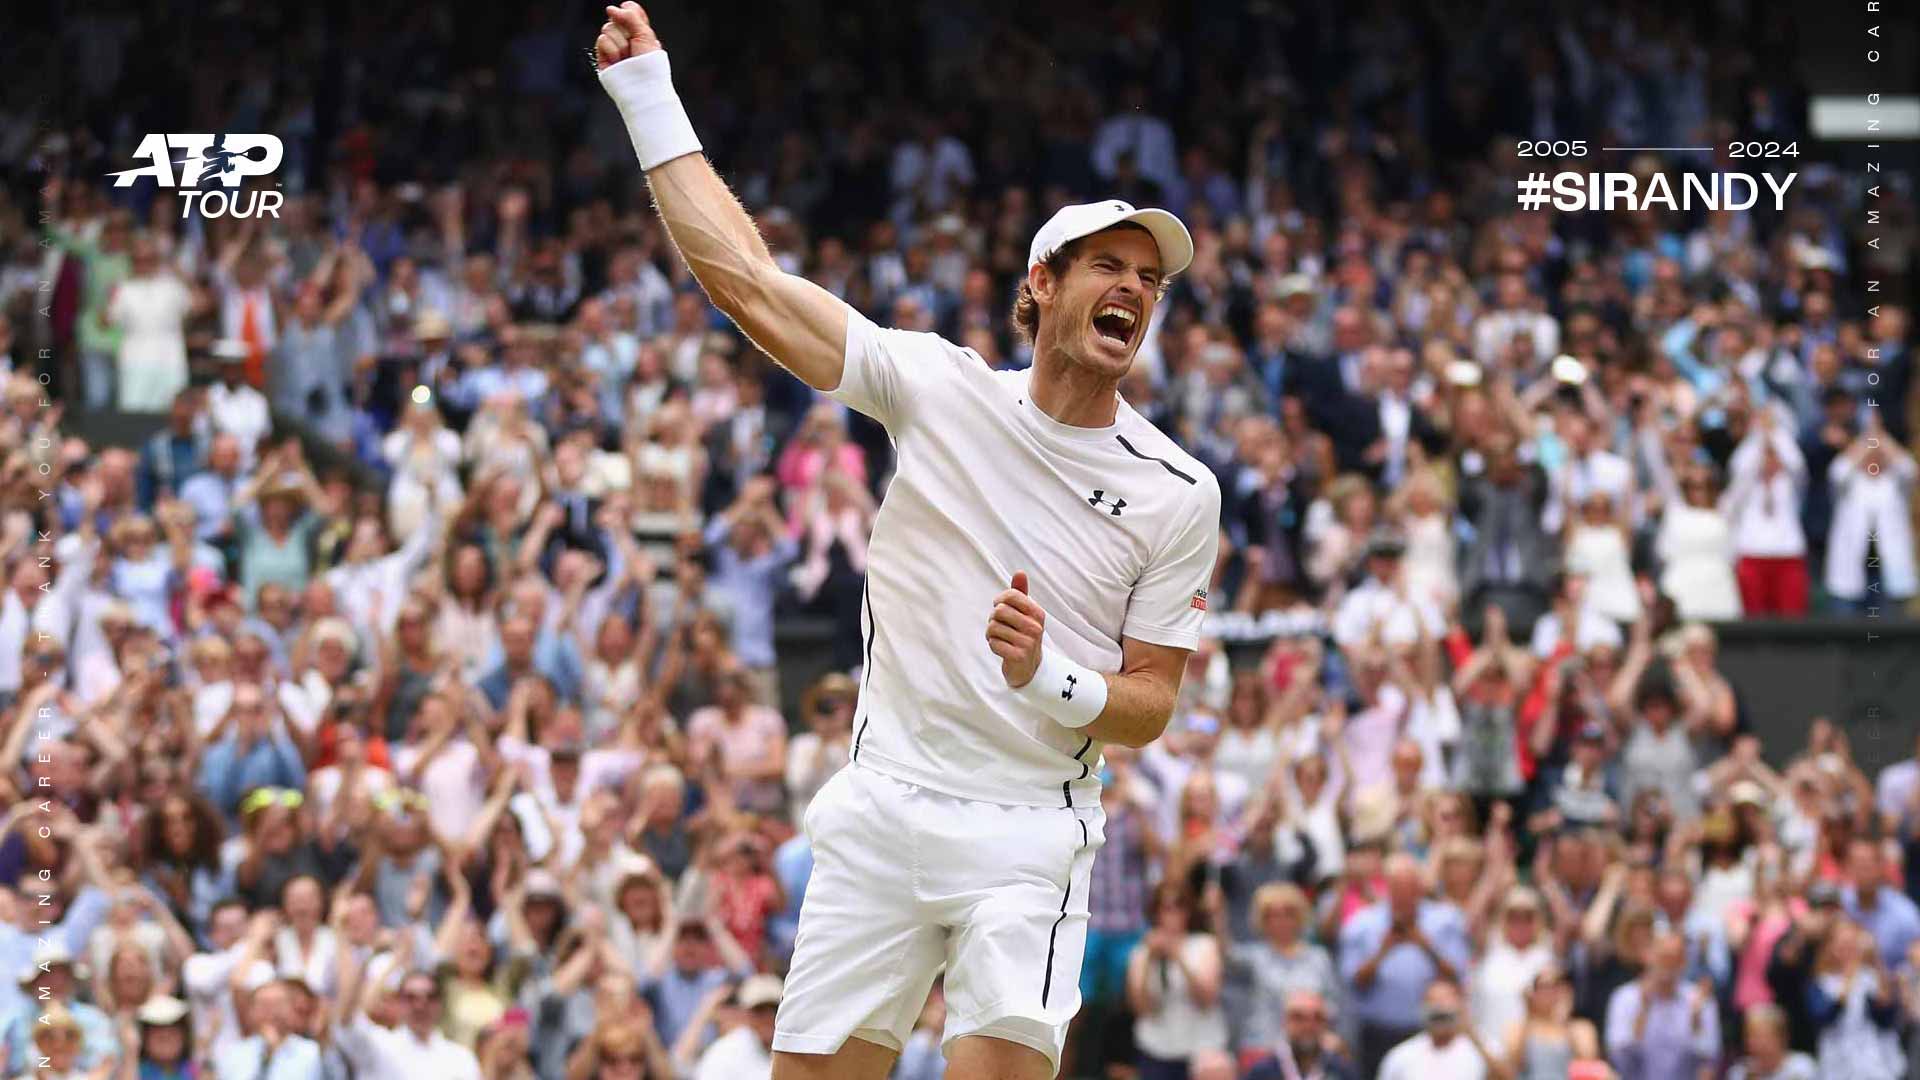 Andy Murray won two Wimbledon titles during his illustrious career.